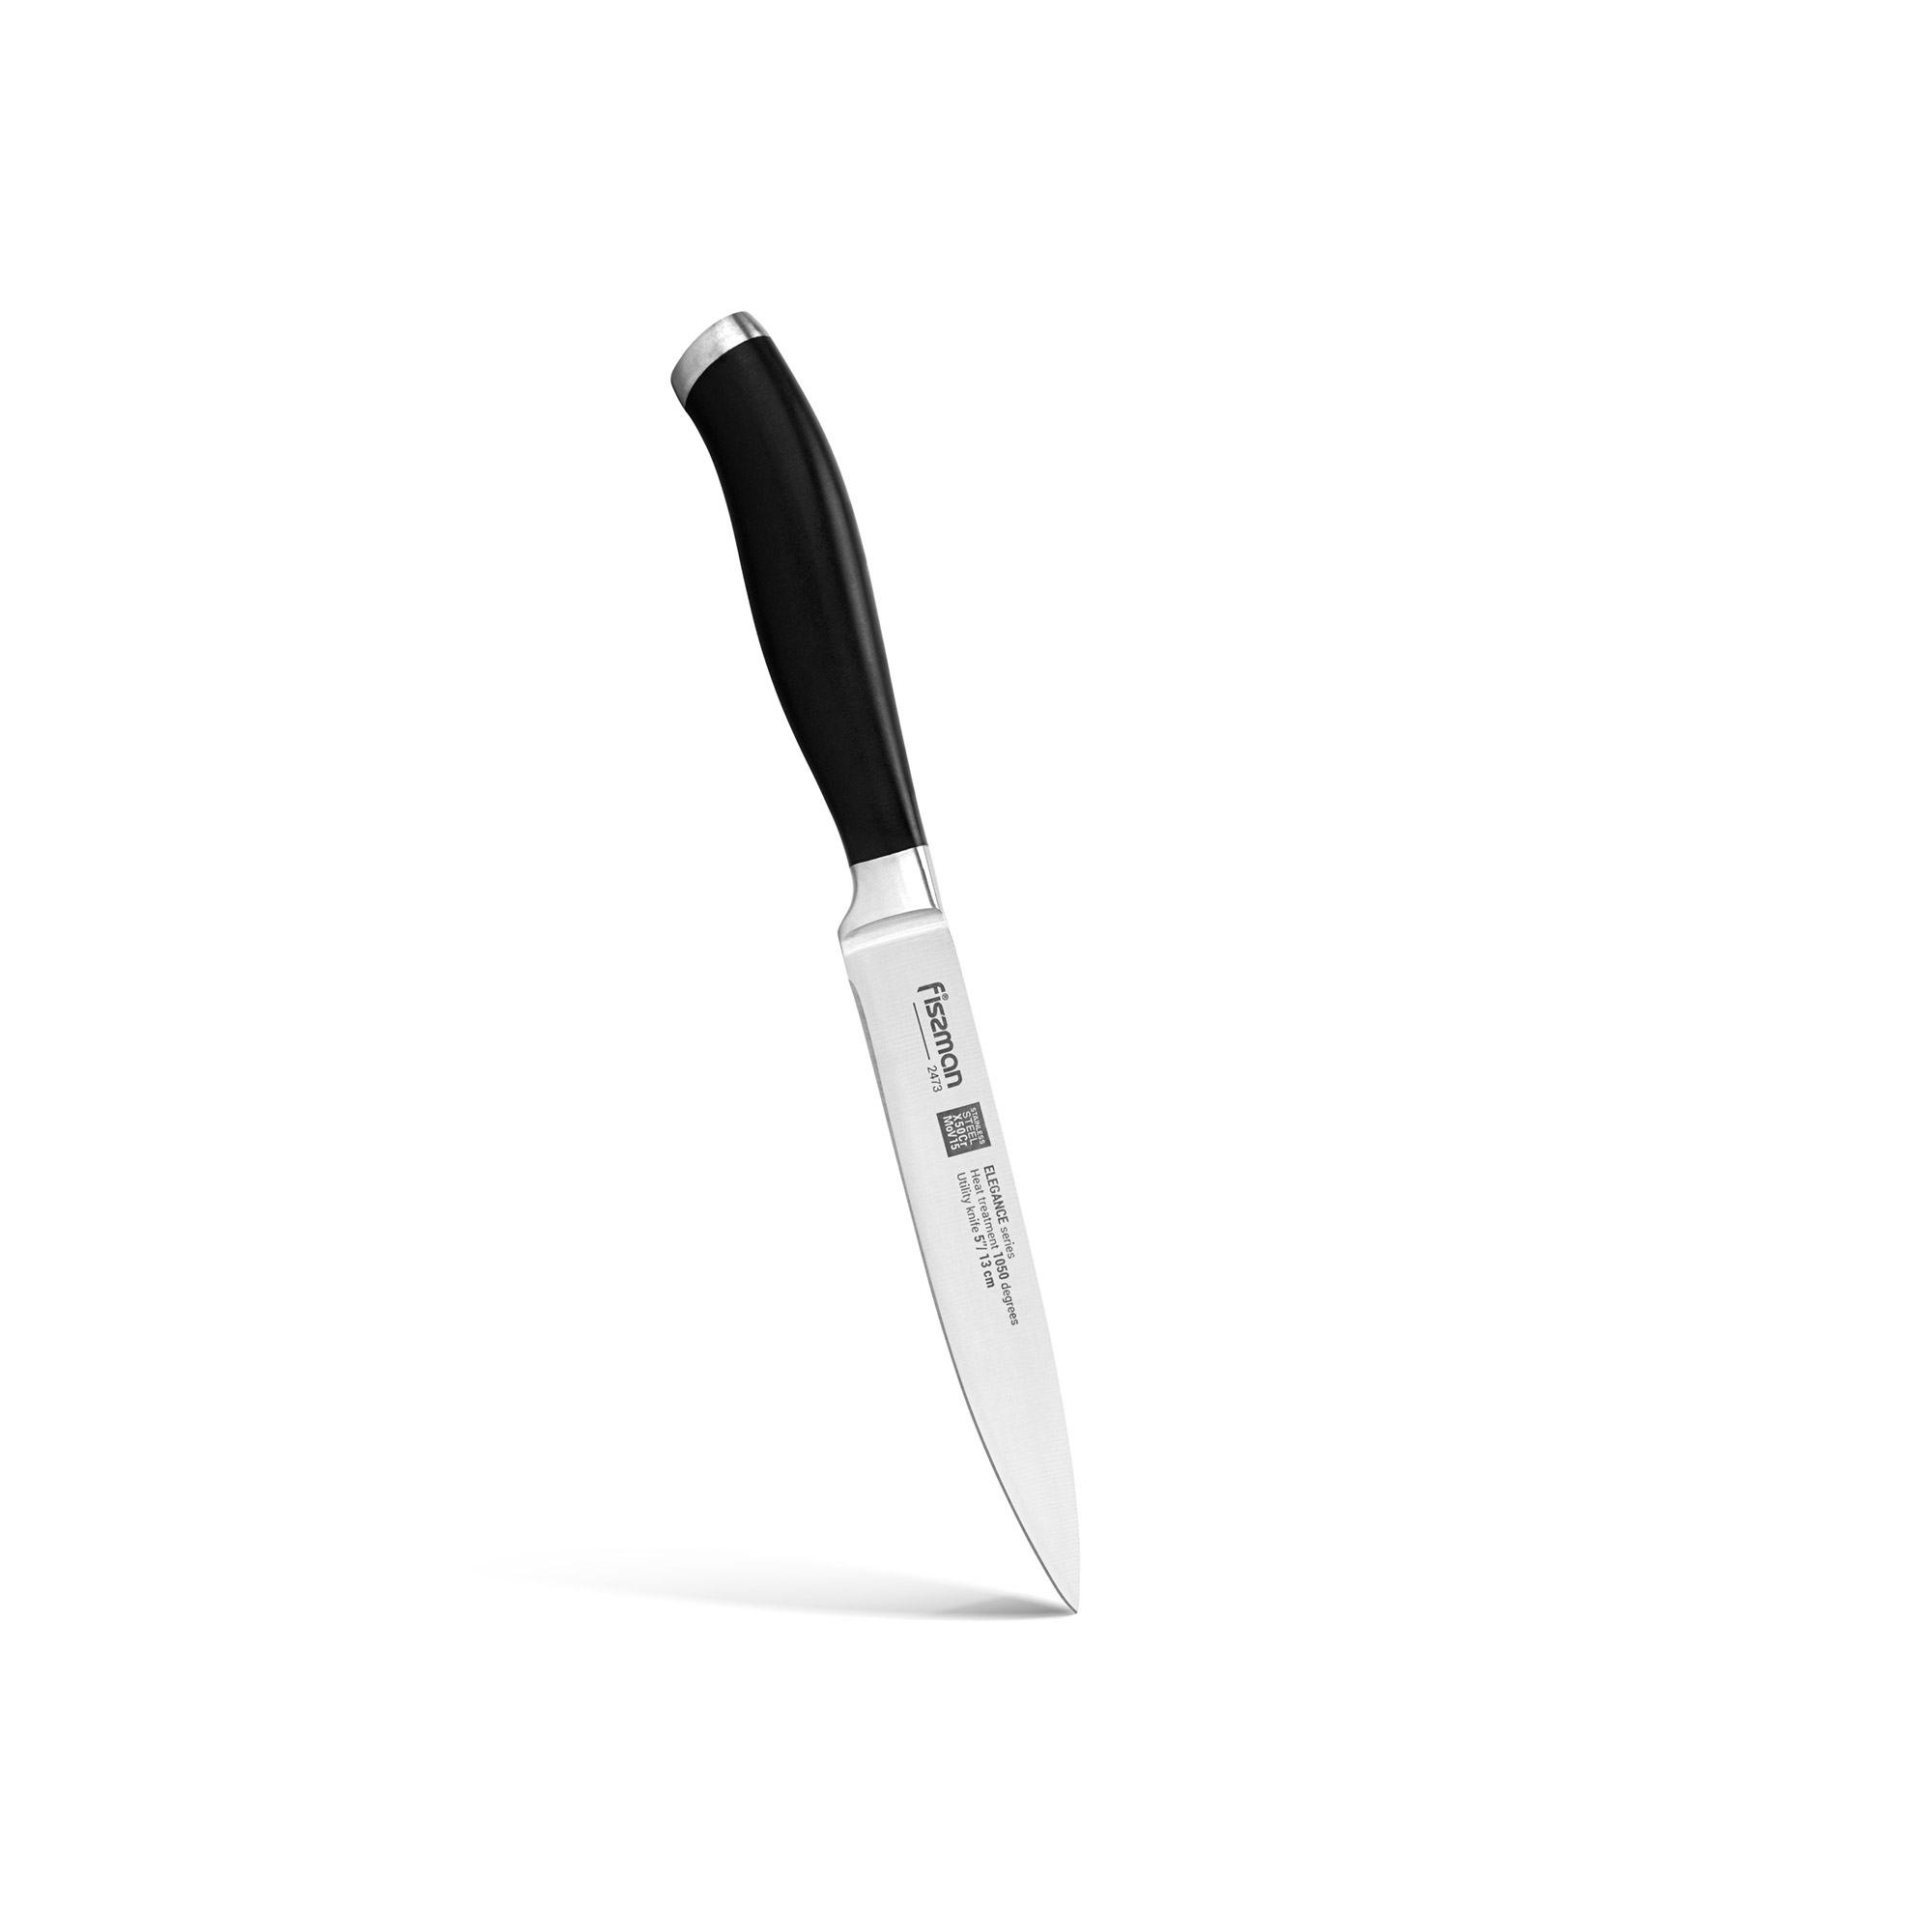 5" Utility knife ELEGANCE (X50CrMoV15 steel)